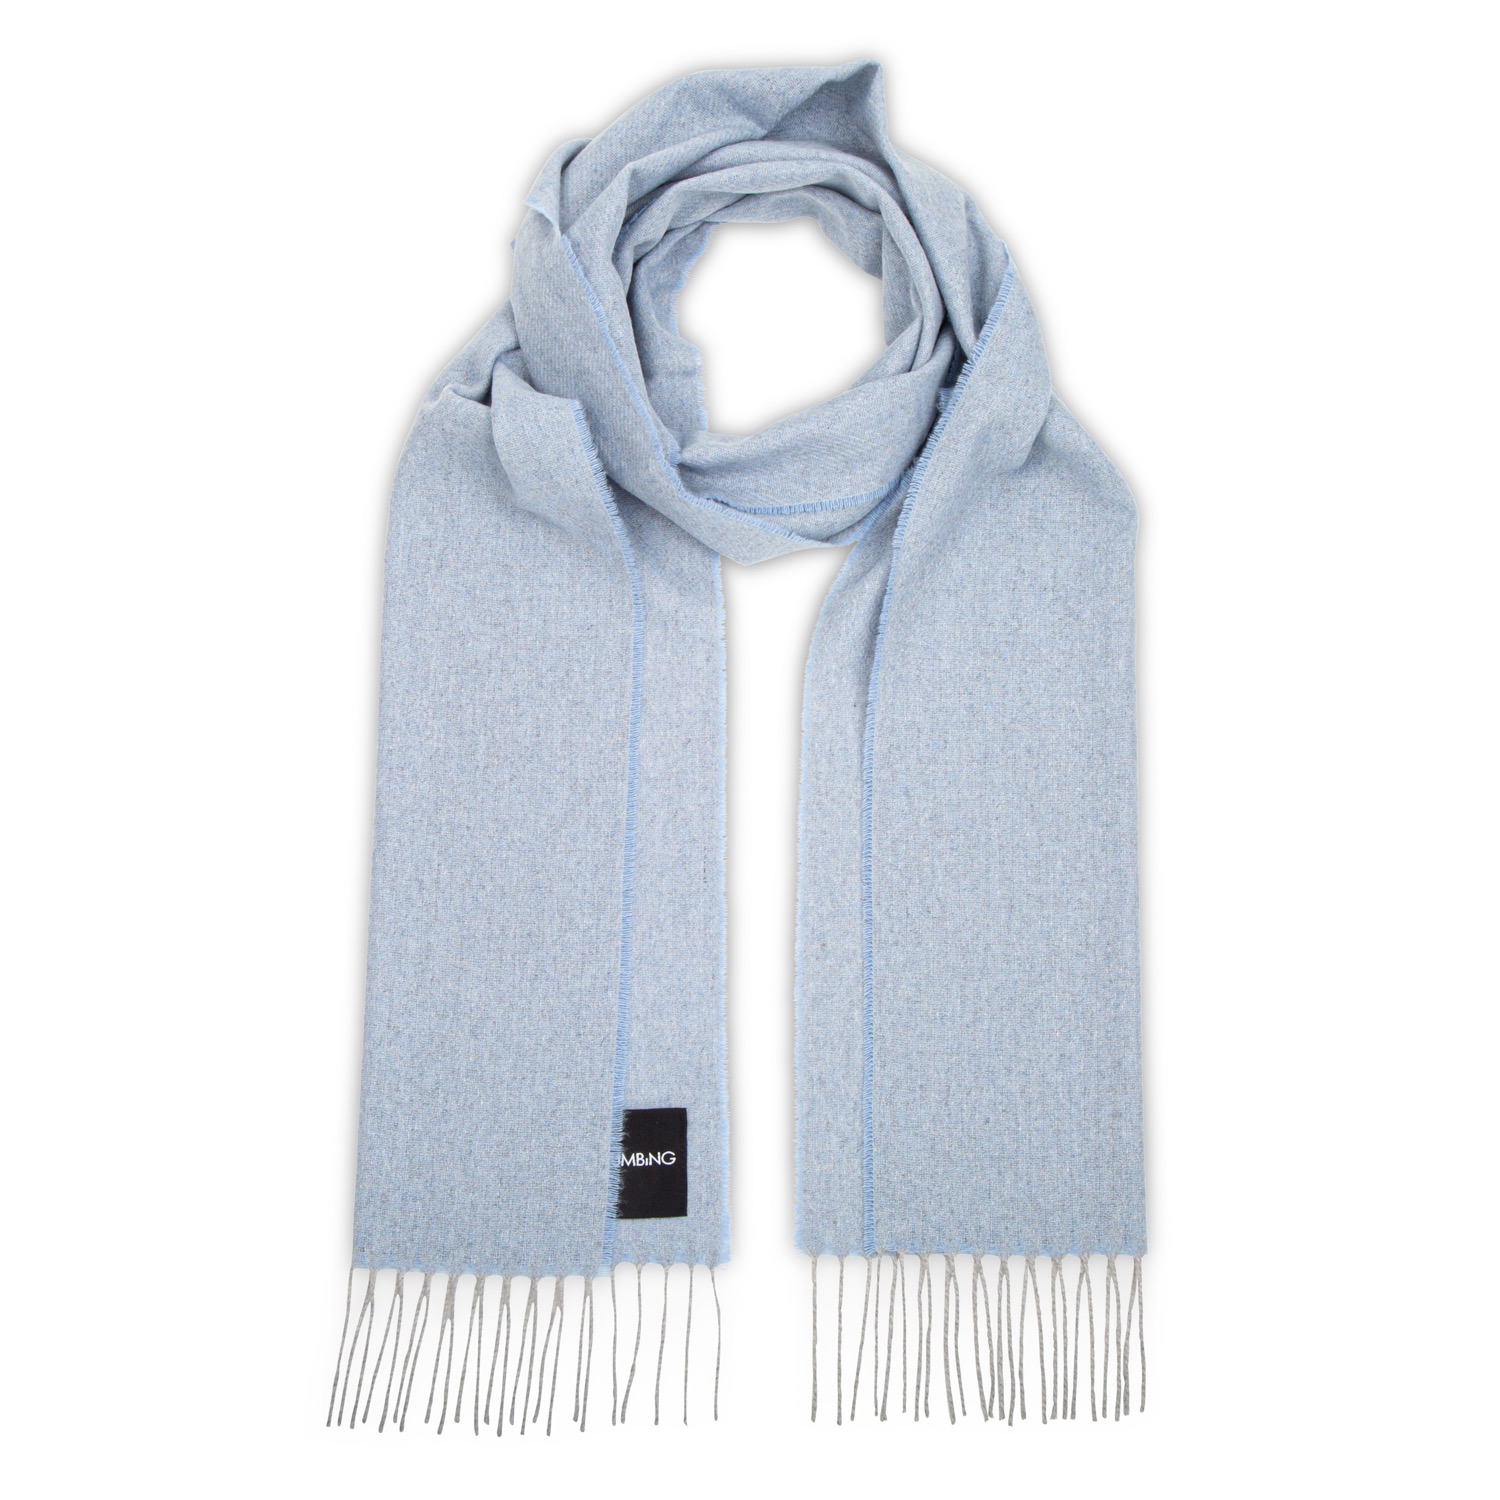 100% cashmere scarf · Navy Blue, Grey Marl, Mink, Cream, Black, Grey ·  Scarves